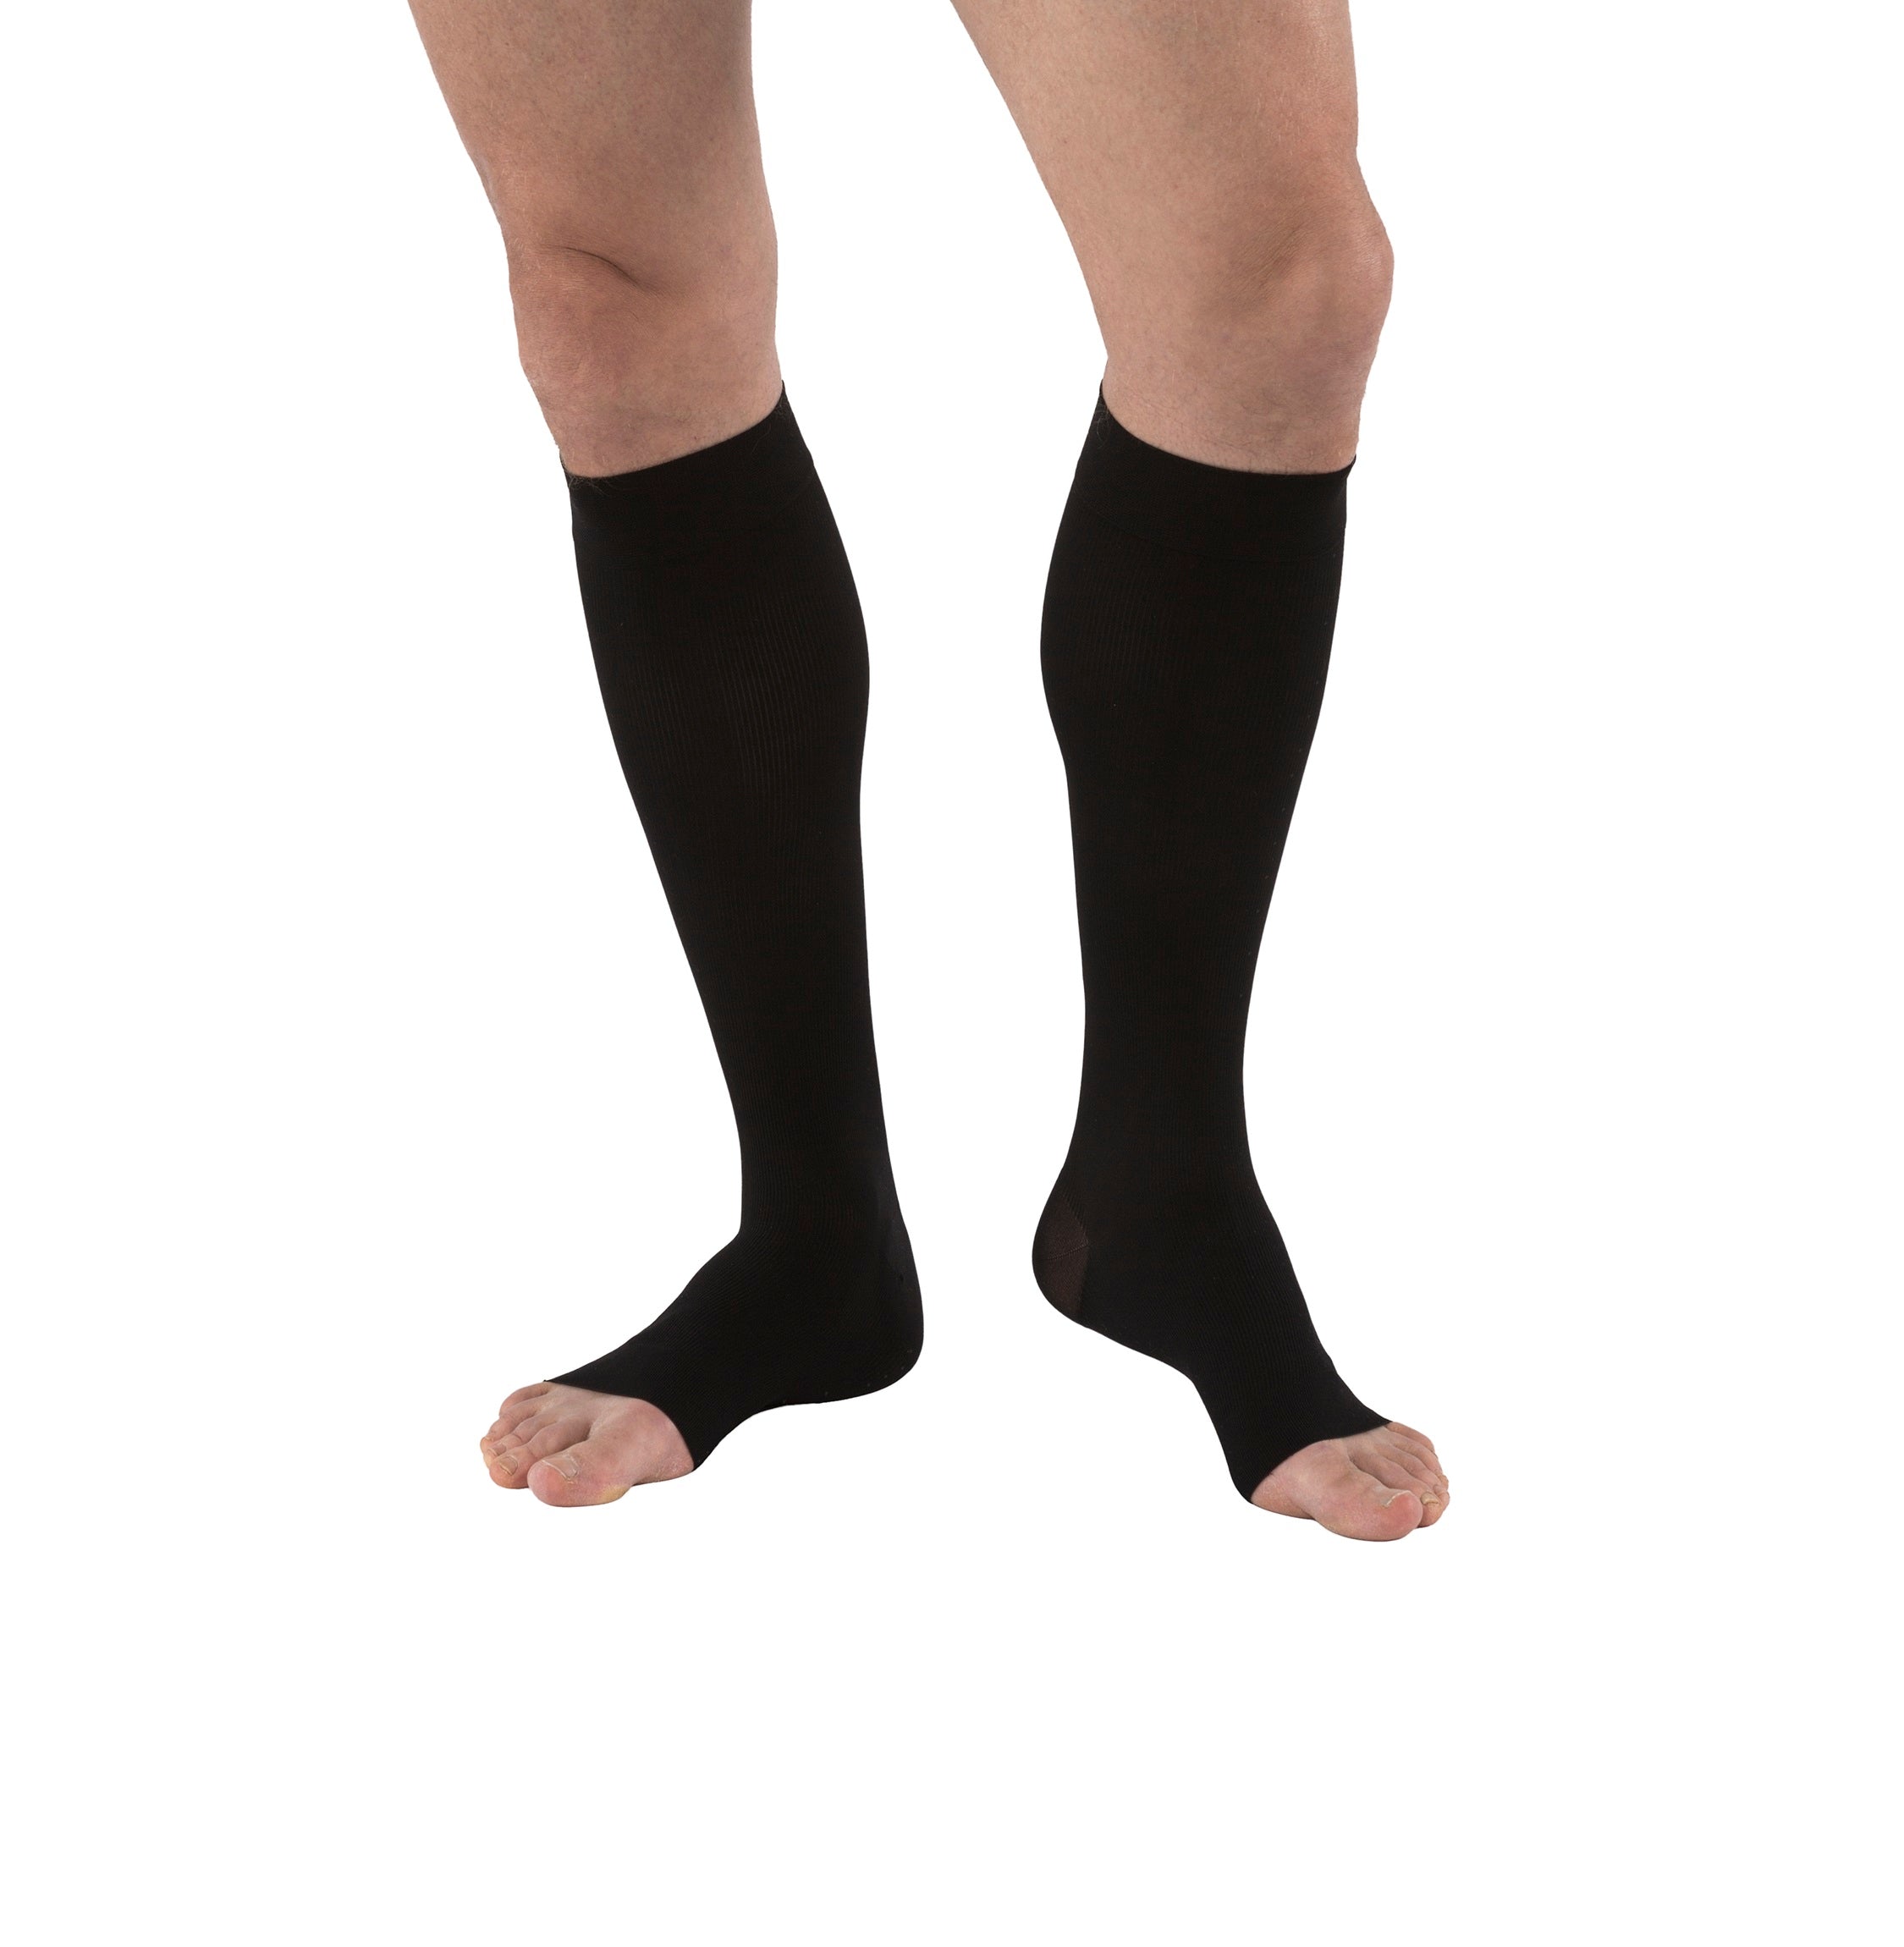 JOBST forMen Compression Socks 20-30 mmHg Knee High